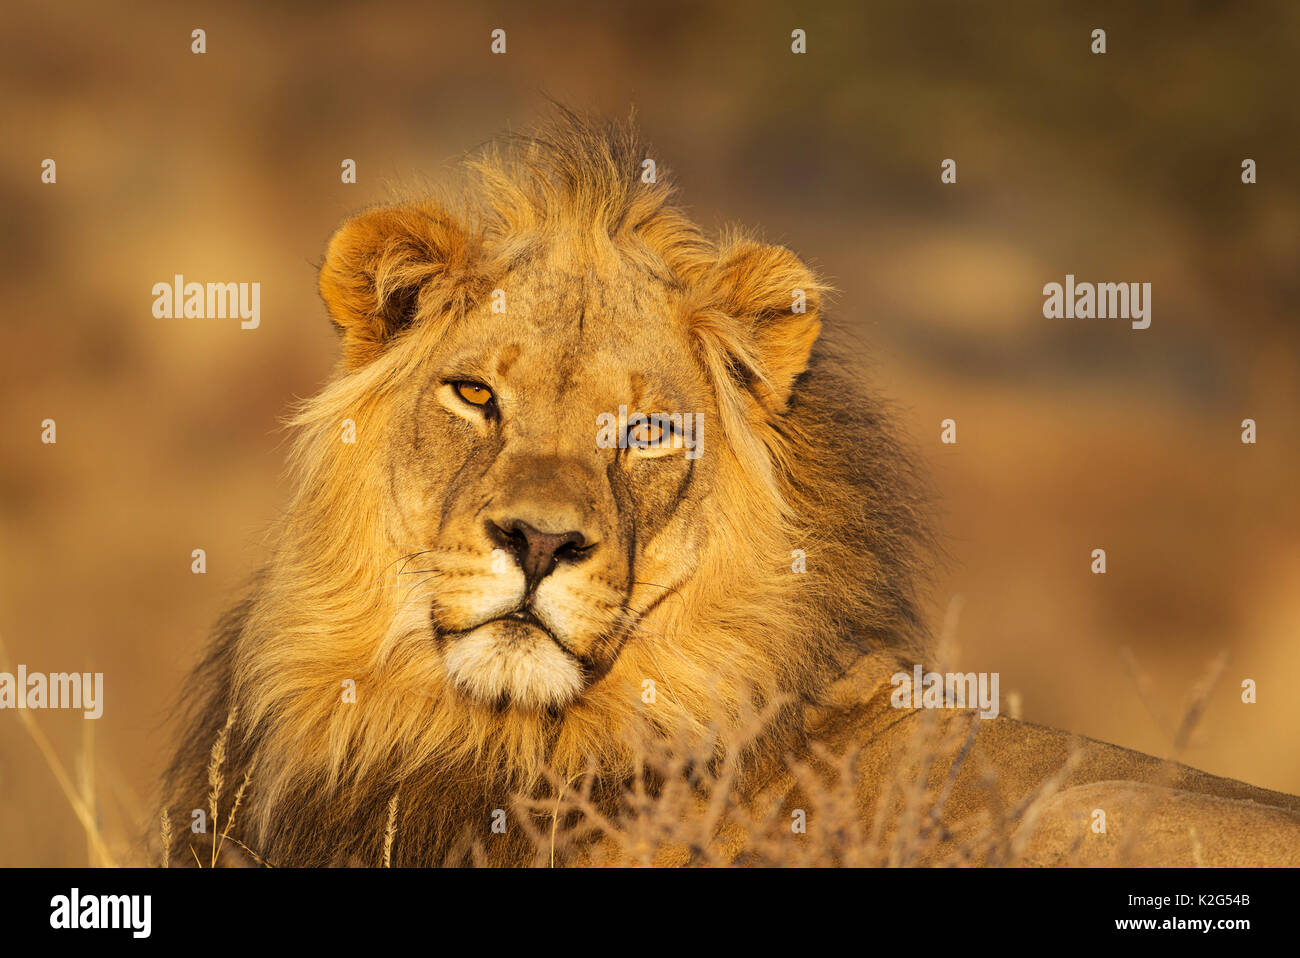 Lion (Panthera leo), ritratto nella luce del mattino. Deserto Kalahari, Kgalagadi Parco transfrontaliero, Sud Africa. Foto Stock